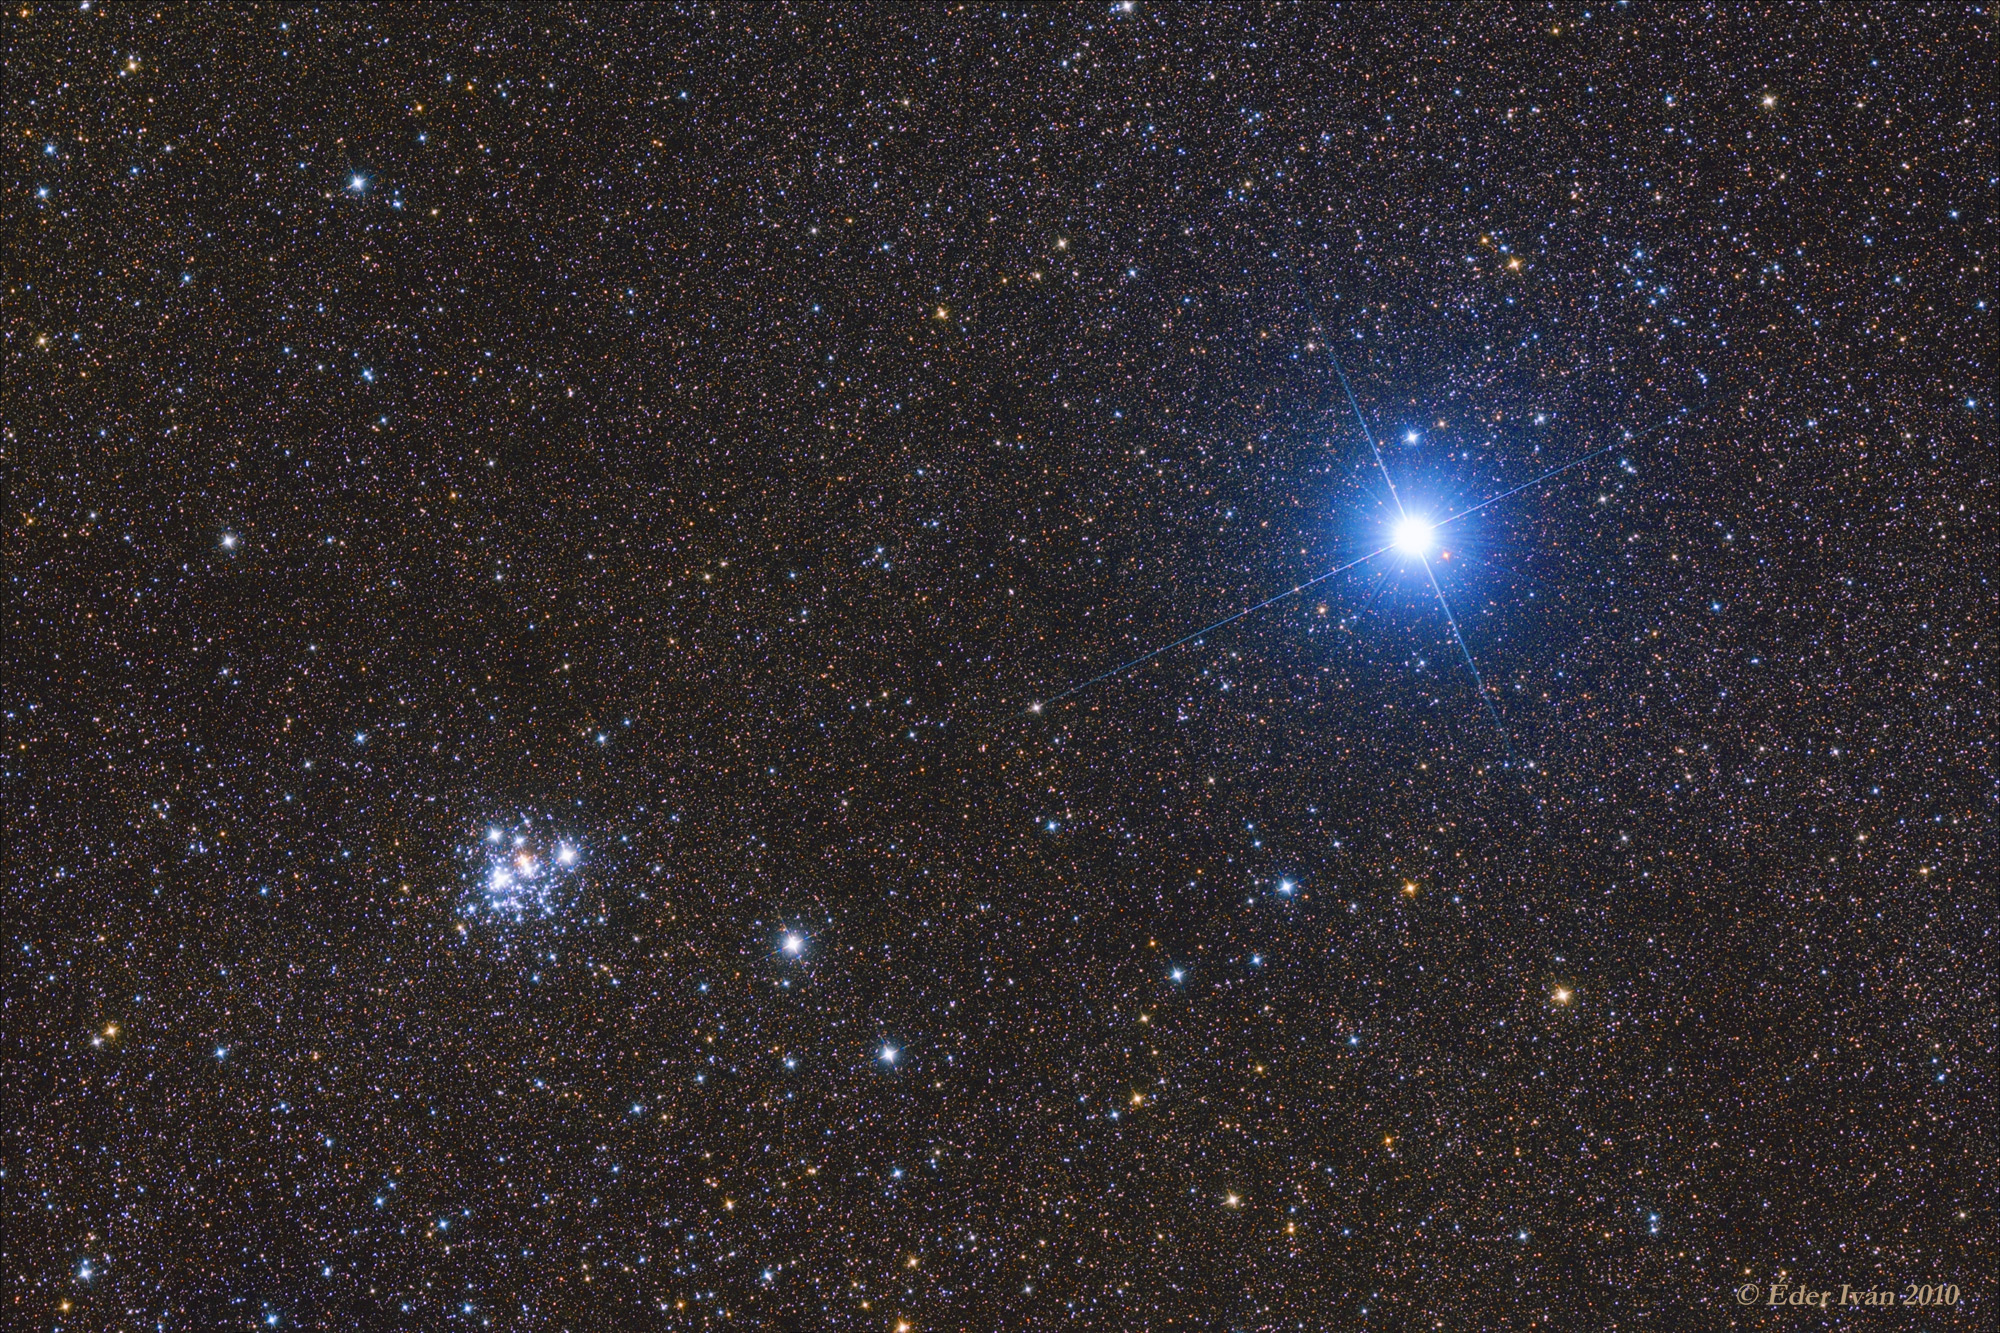 The pair of Jewel Box (NGC 4755) and Beta Crucis (Mimosa)